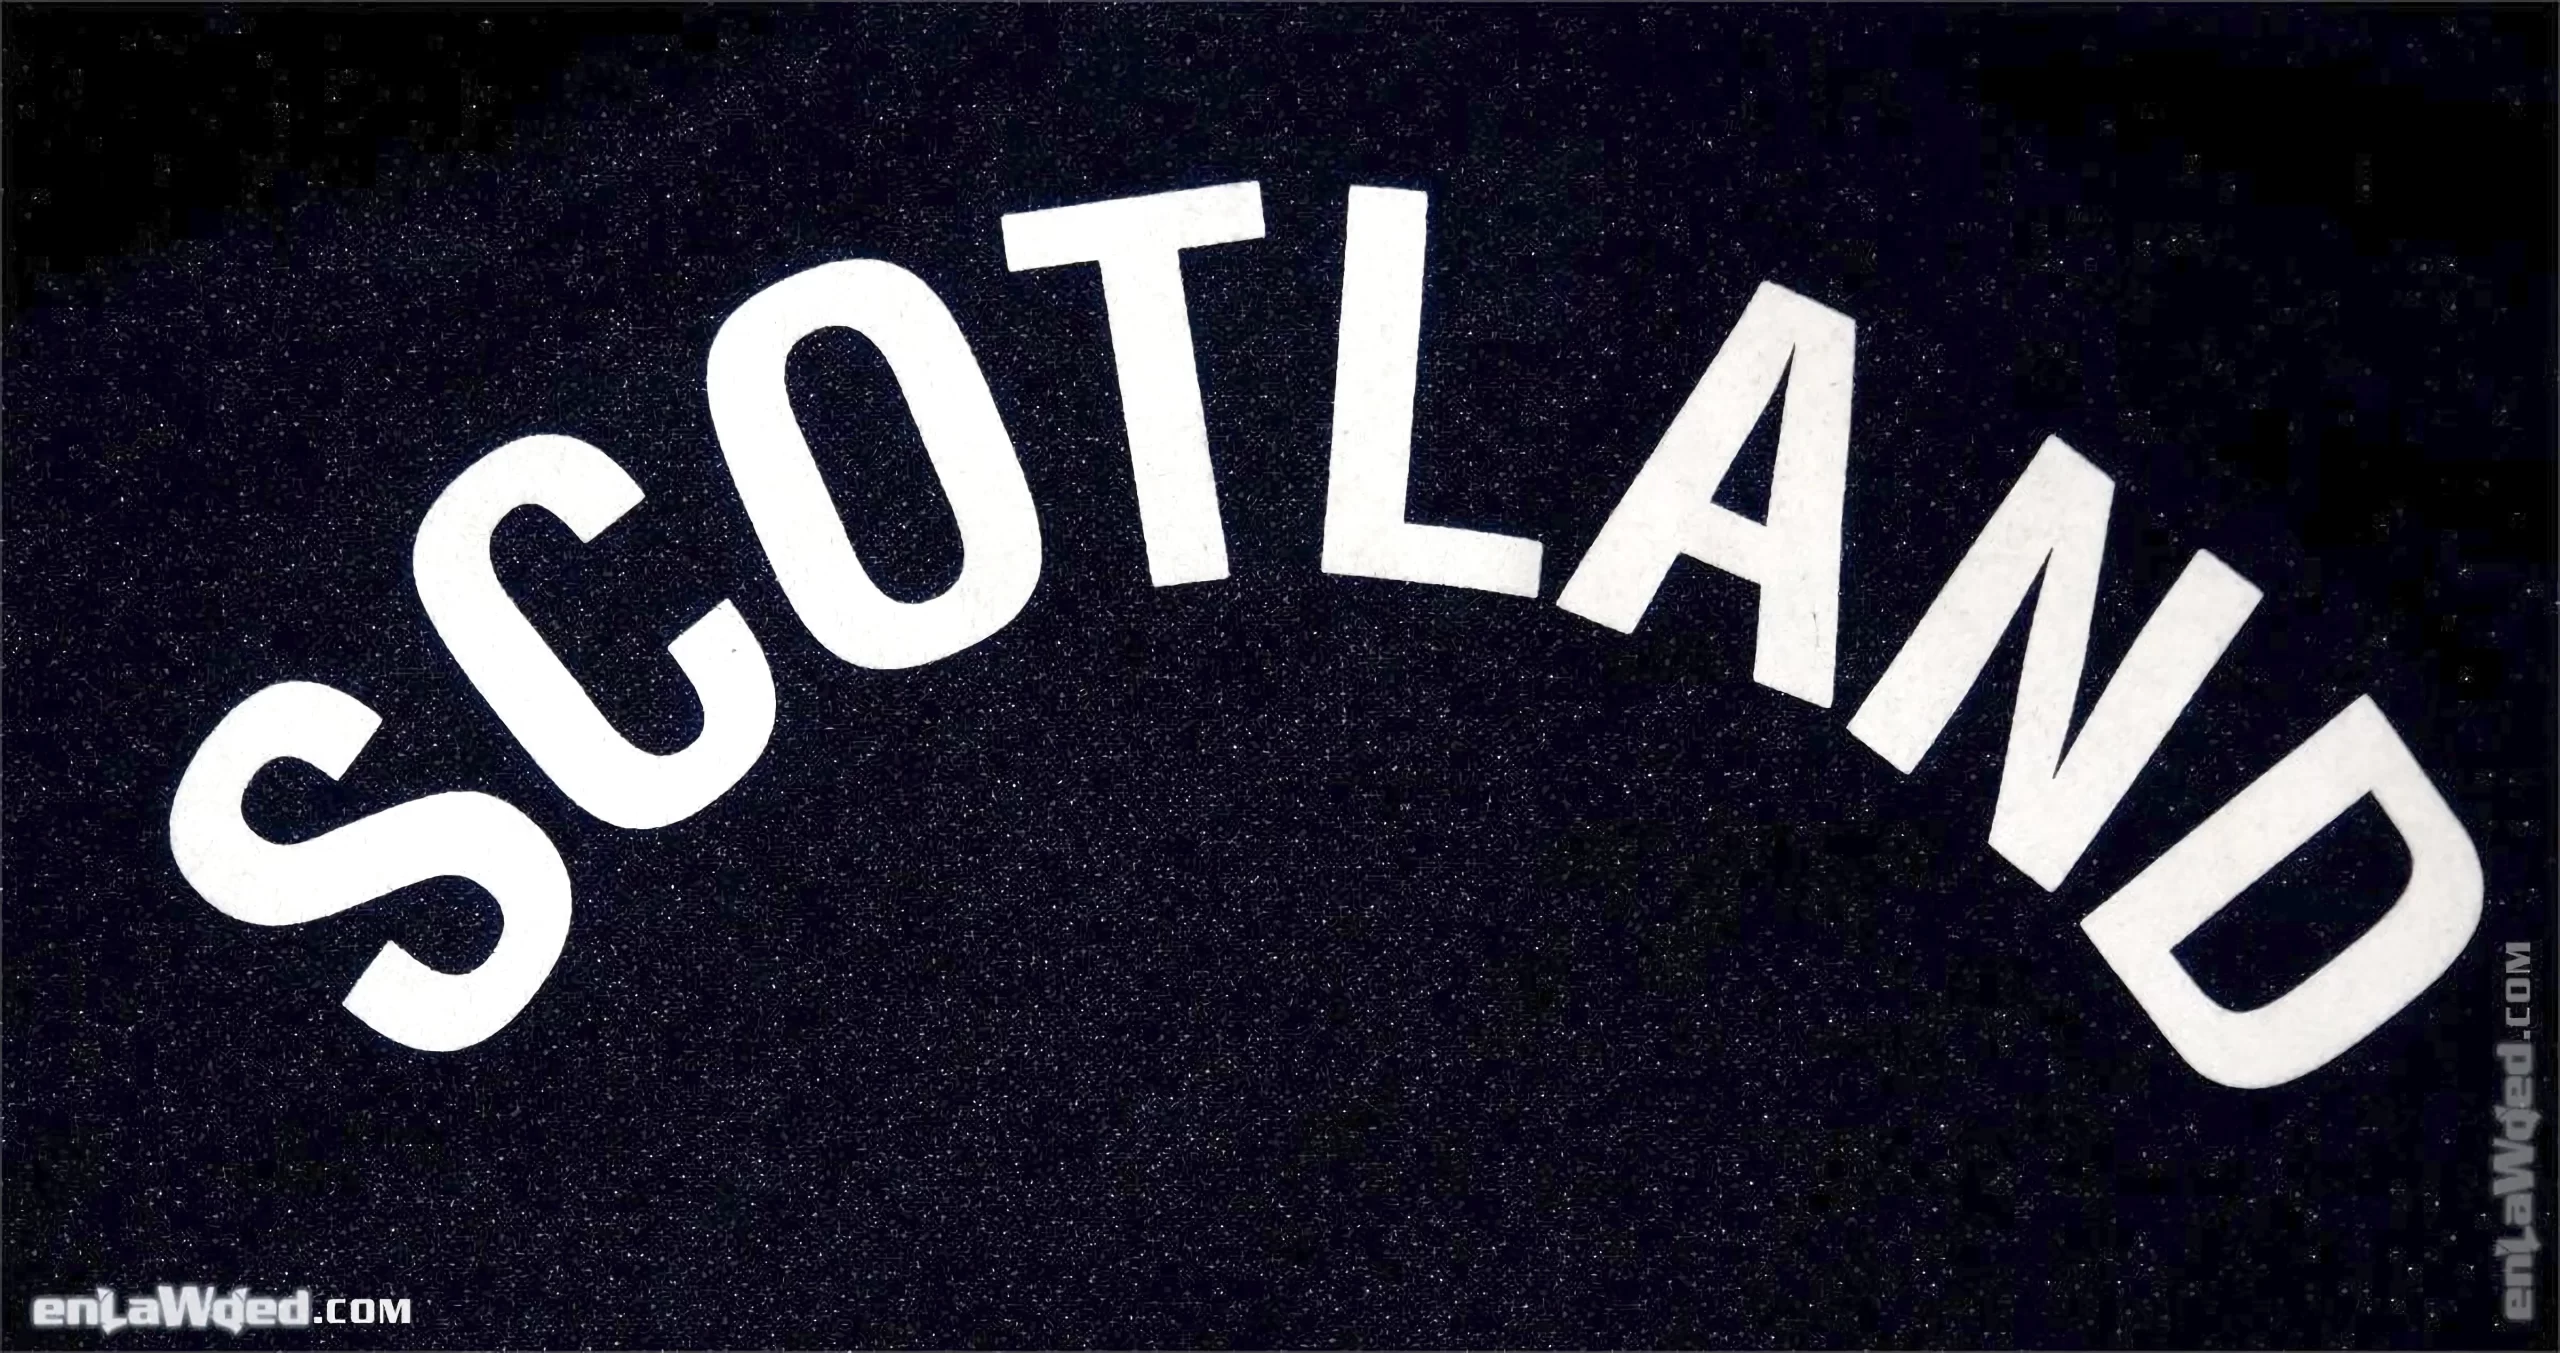 Men’s 2004 Scotland Track Top by Adidas Originals: Quiet (EnLawded.com file #lmcghxck1ualn97k995)